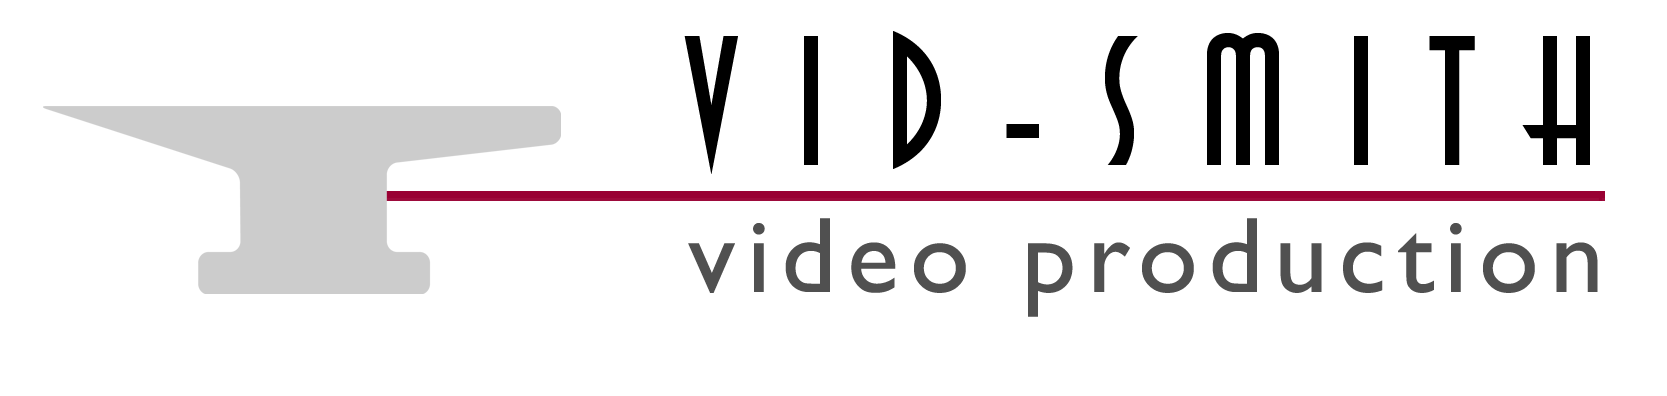 Vid-smith Video Production logo